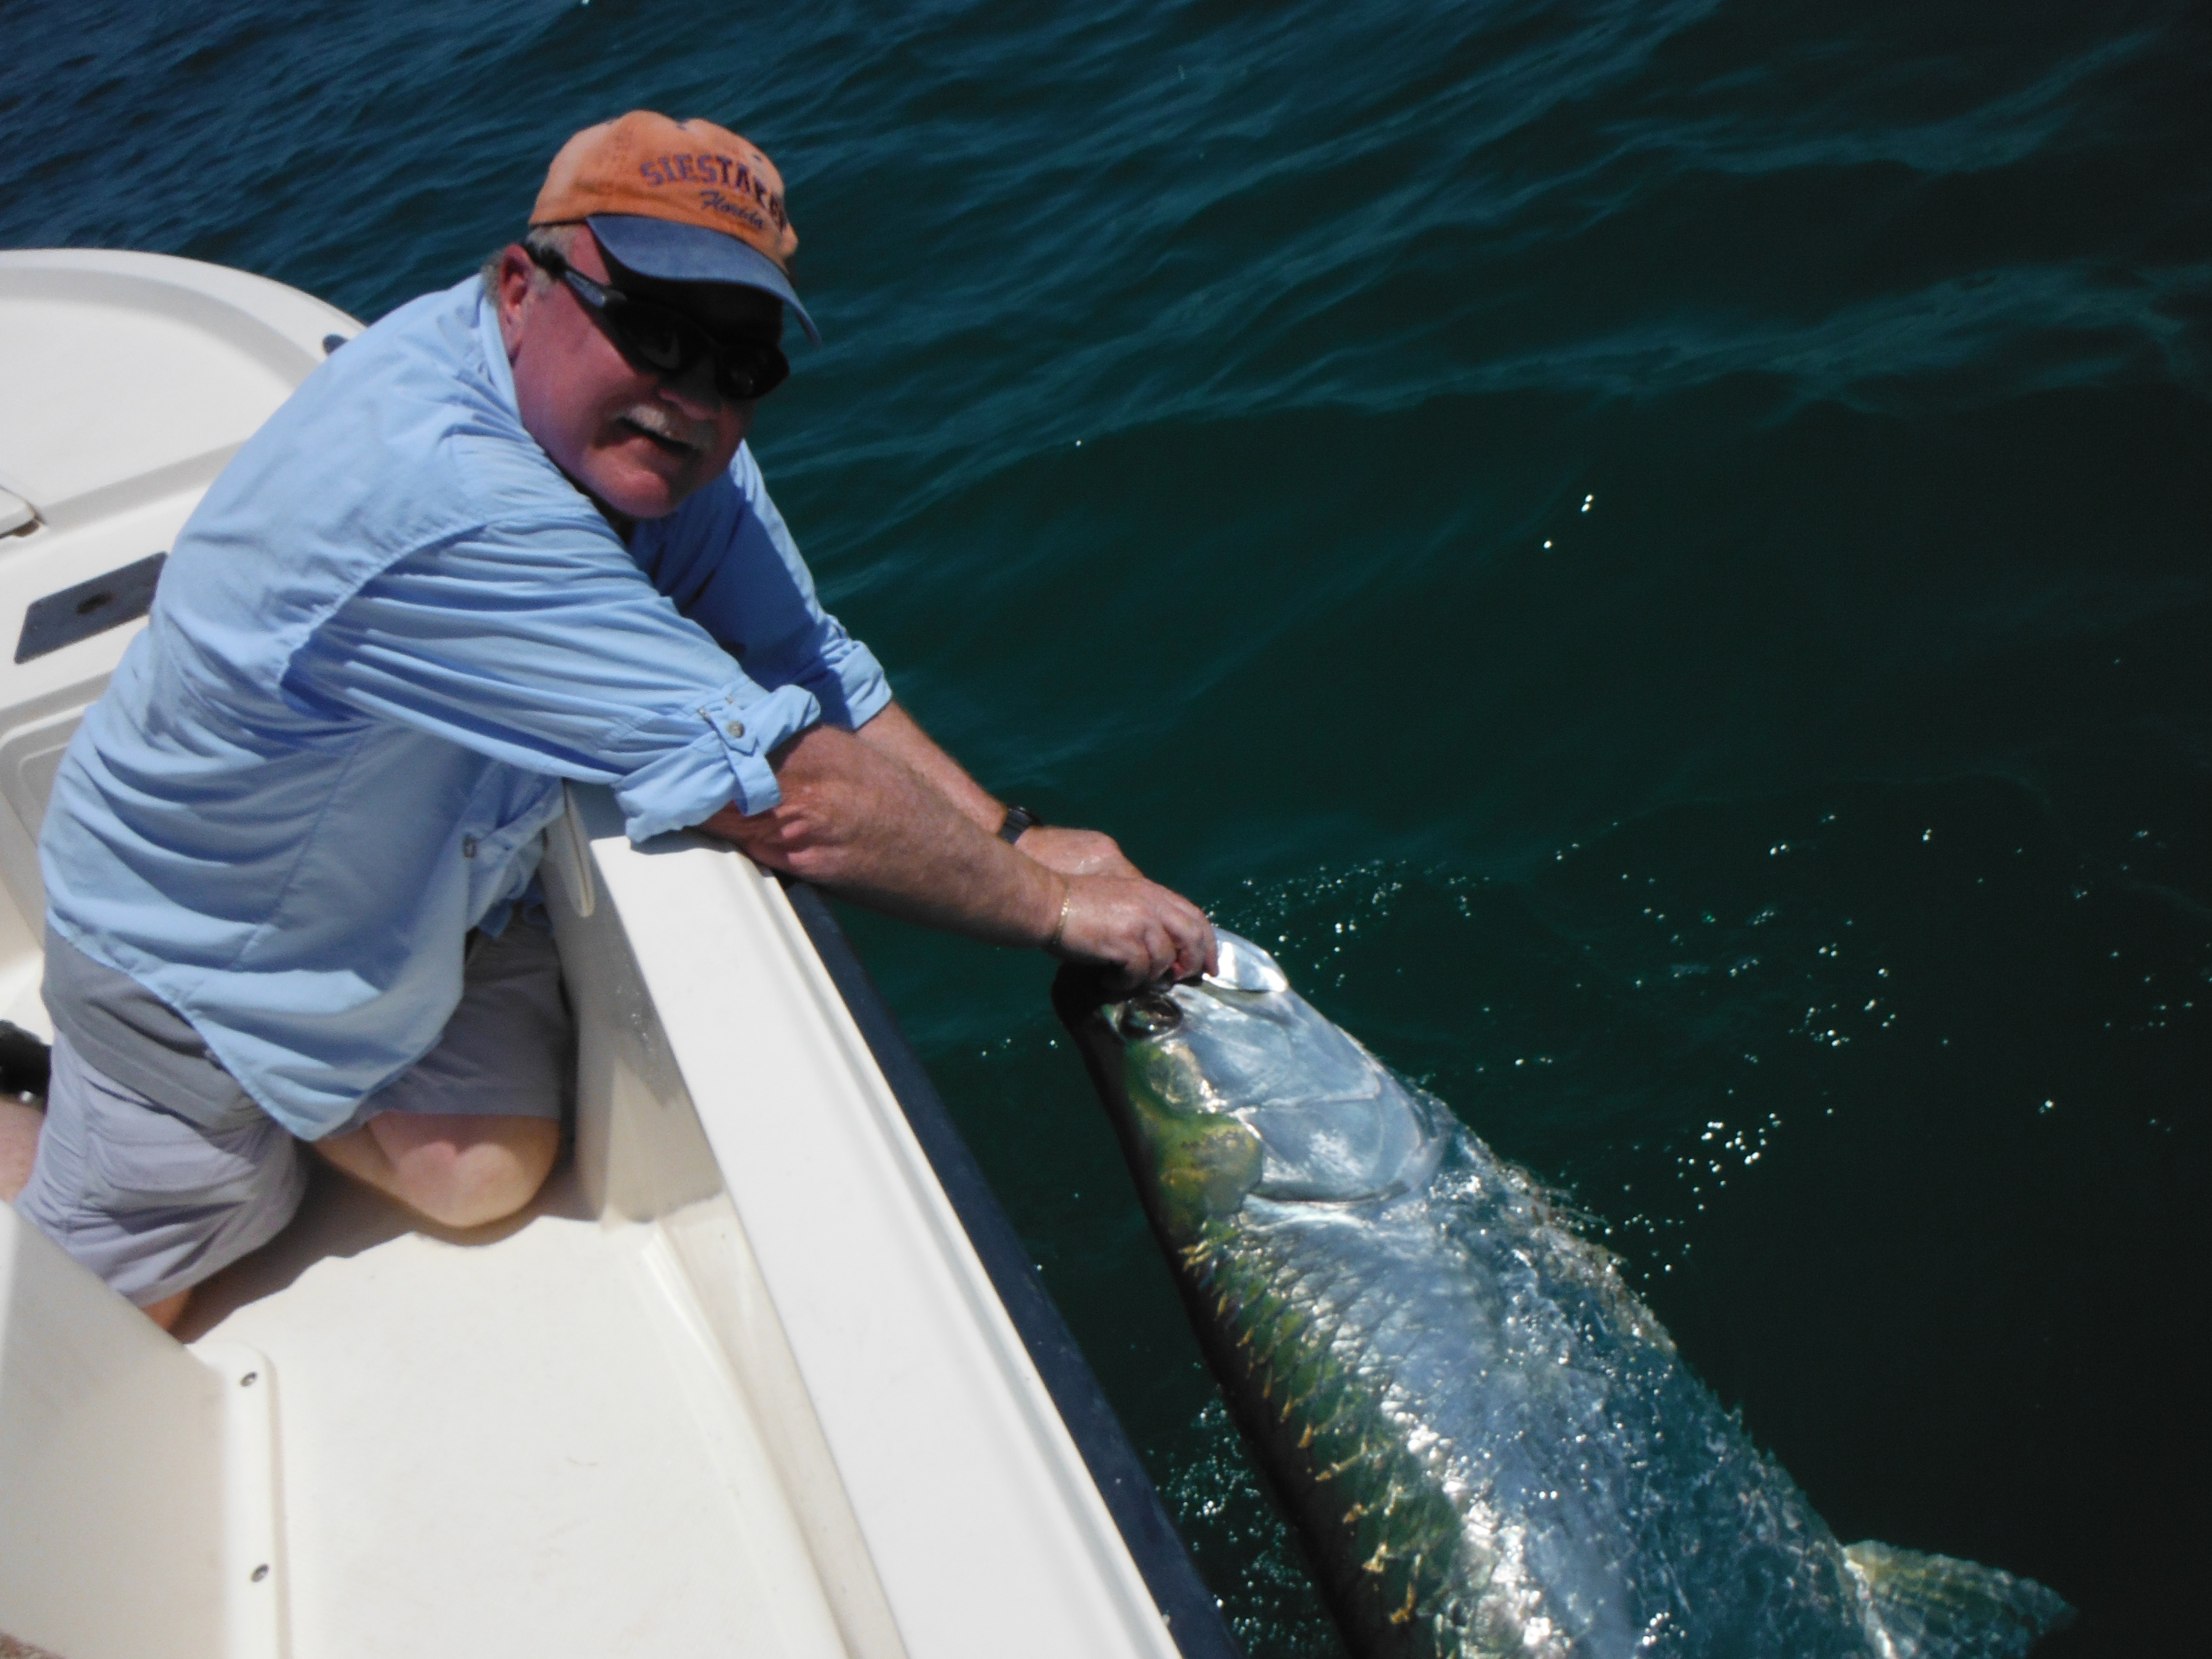 Sarasota tarpon Fishing charters